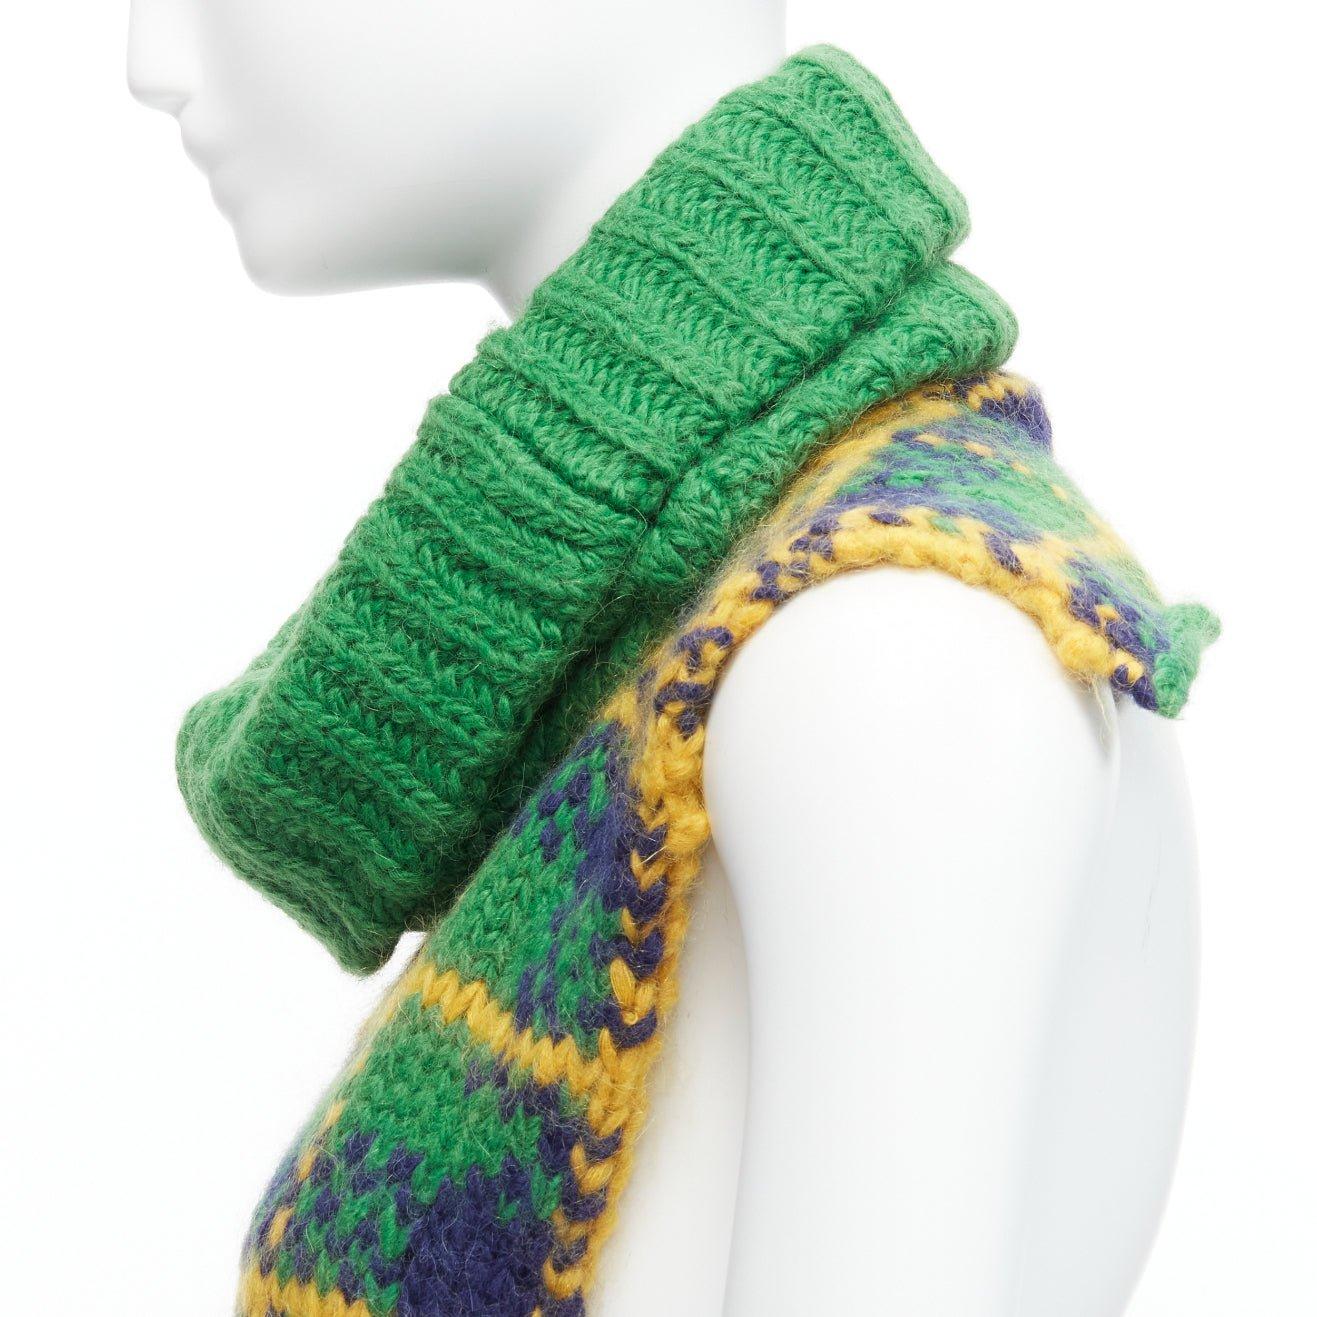 OLD CELINE Phoebe Philo plaid check wool blend turtleneck vest dickie scarf 1